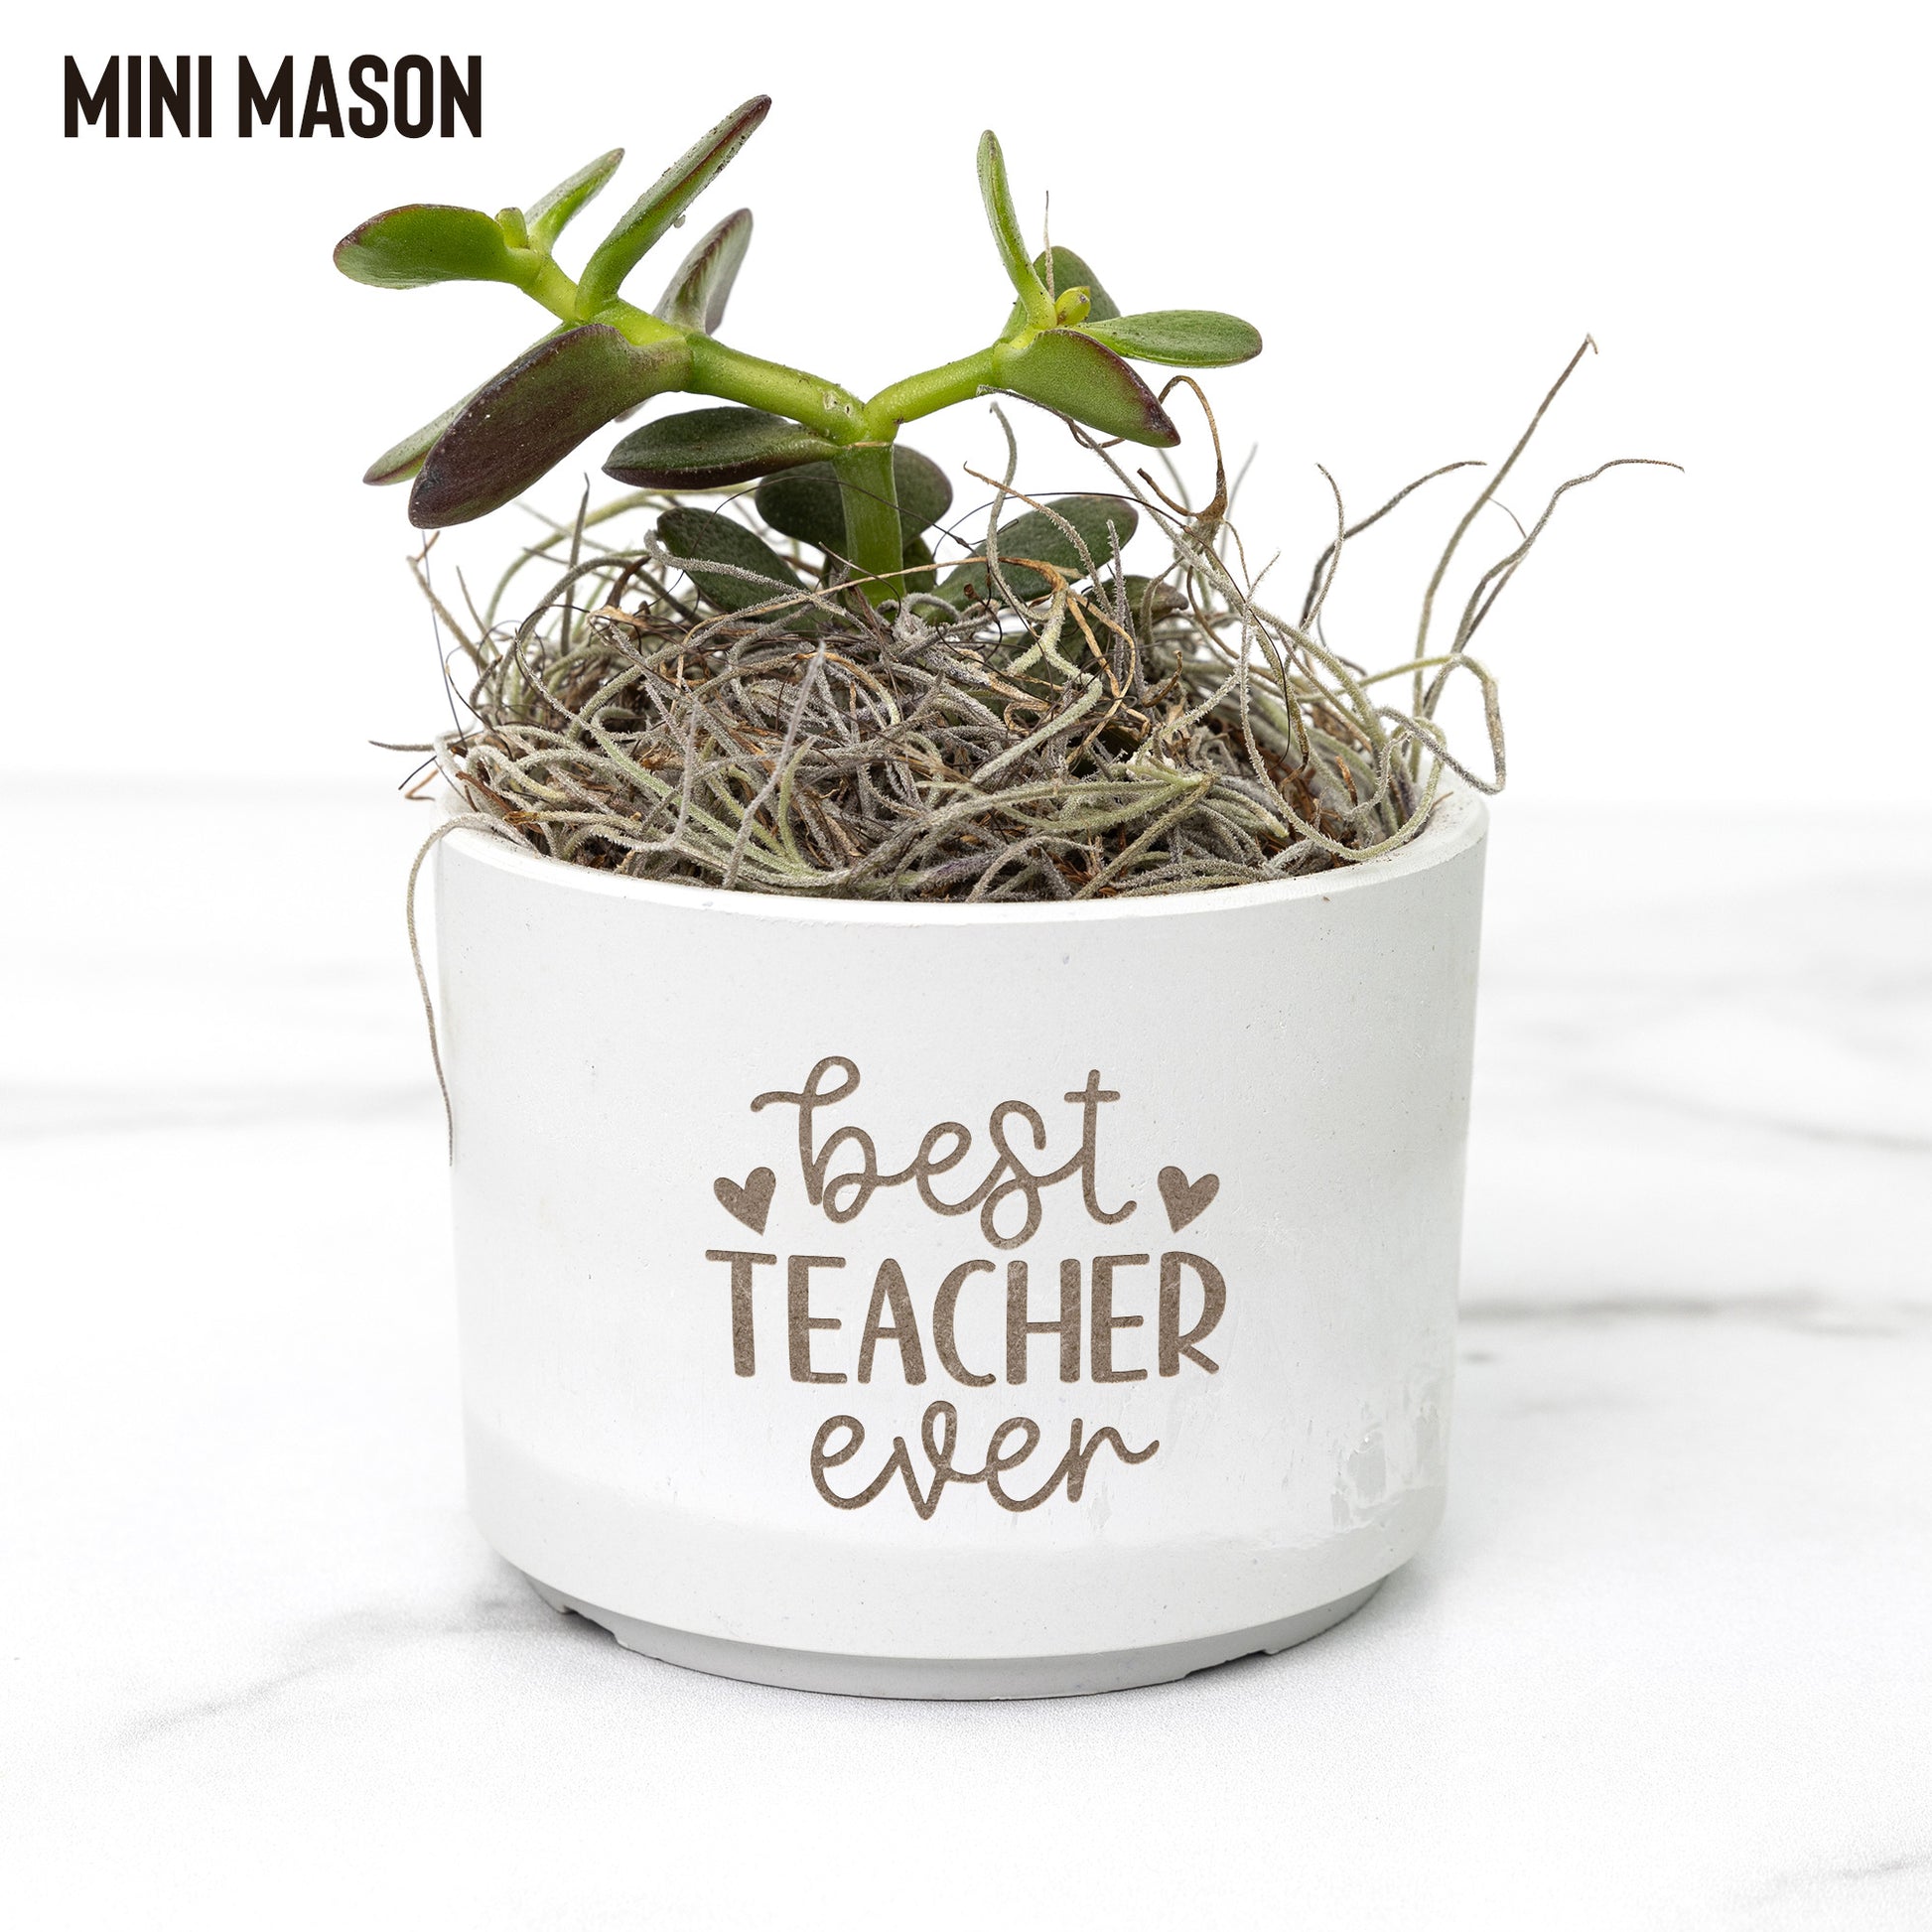 Best Teacher Ever Potted Desk Plant - Mardonyx Office